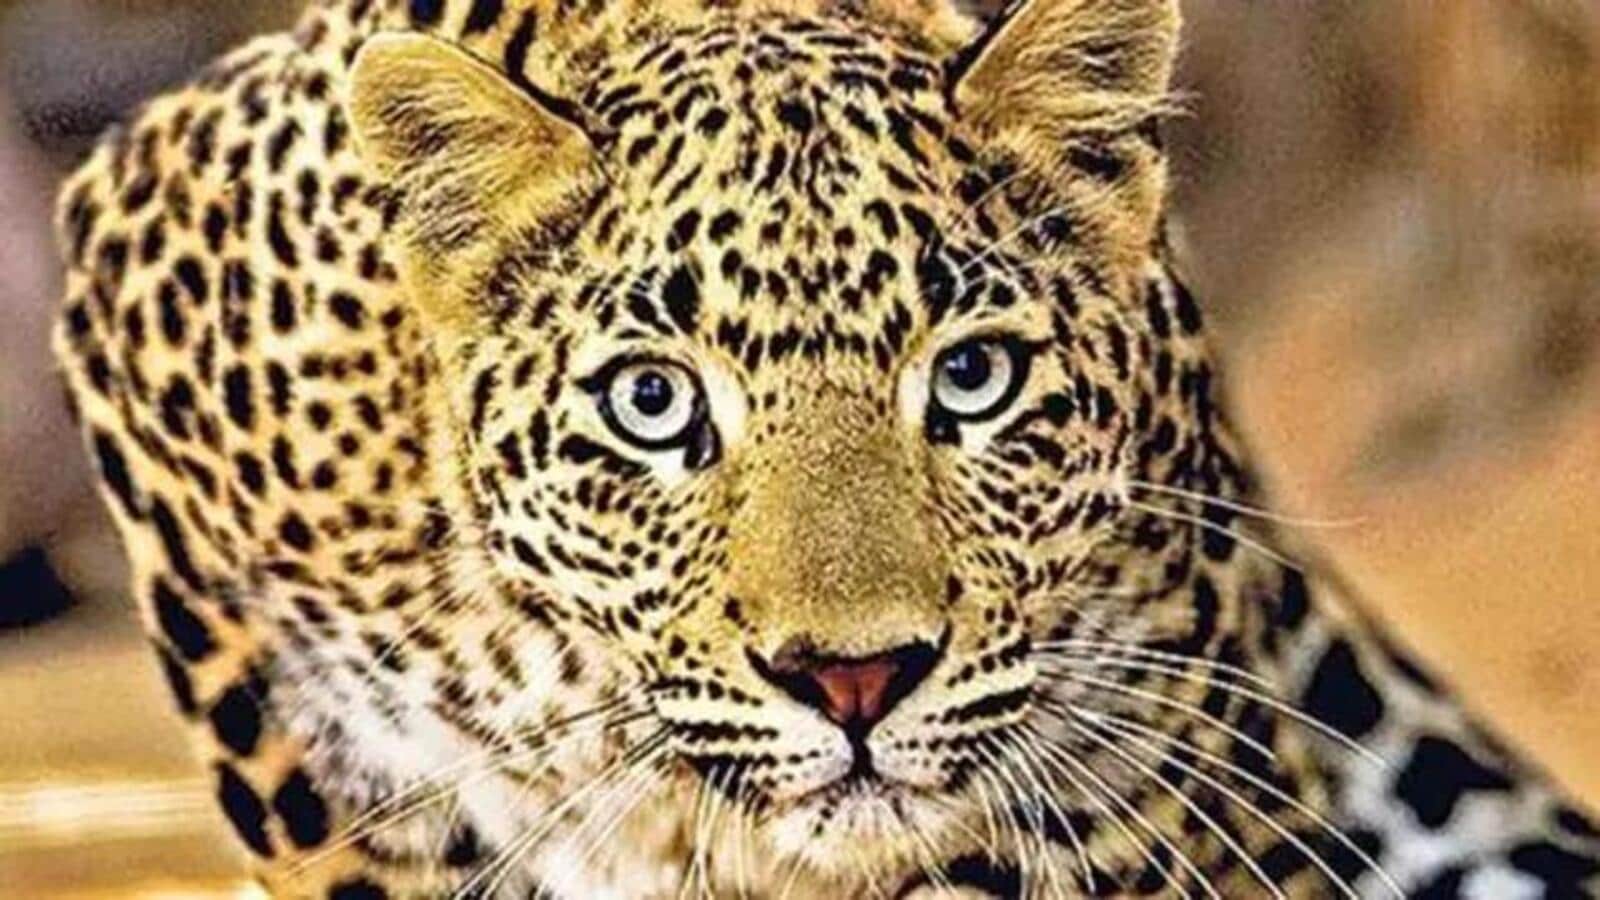 Leopard found dead in Kozhikode, Kozhikode